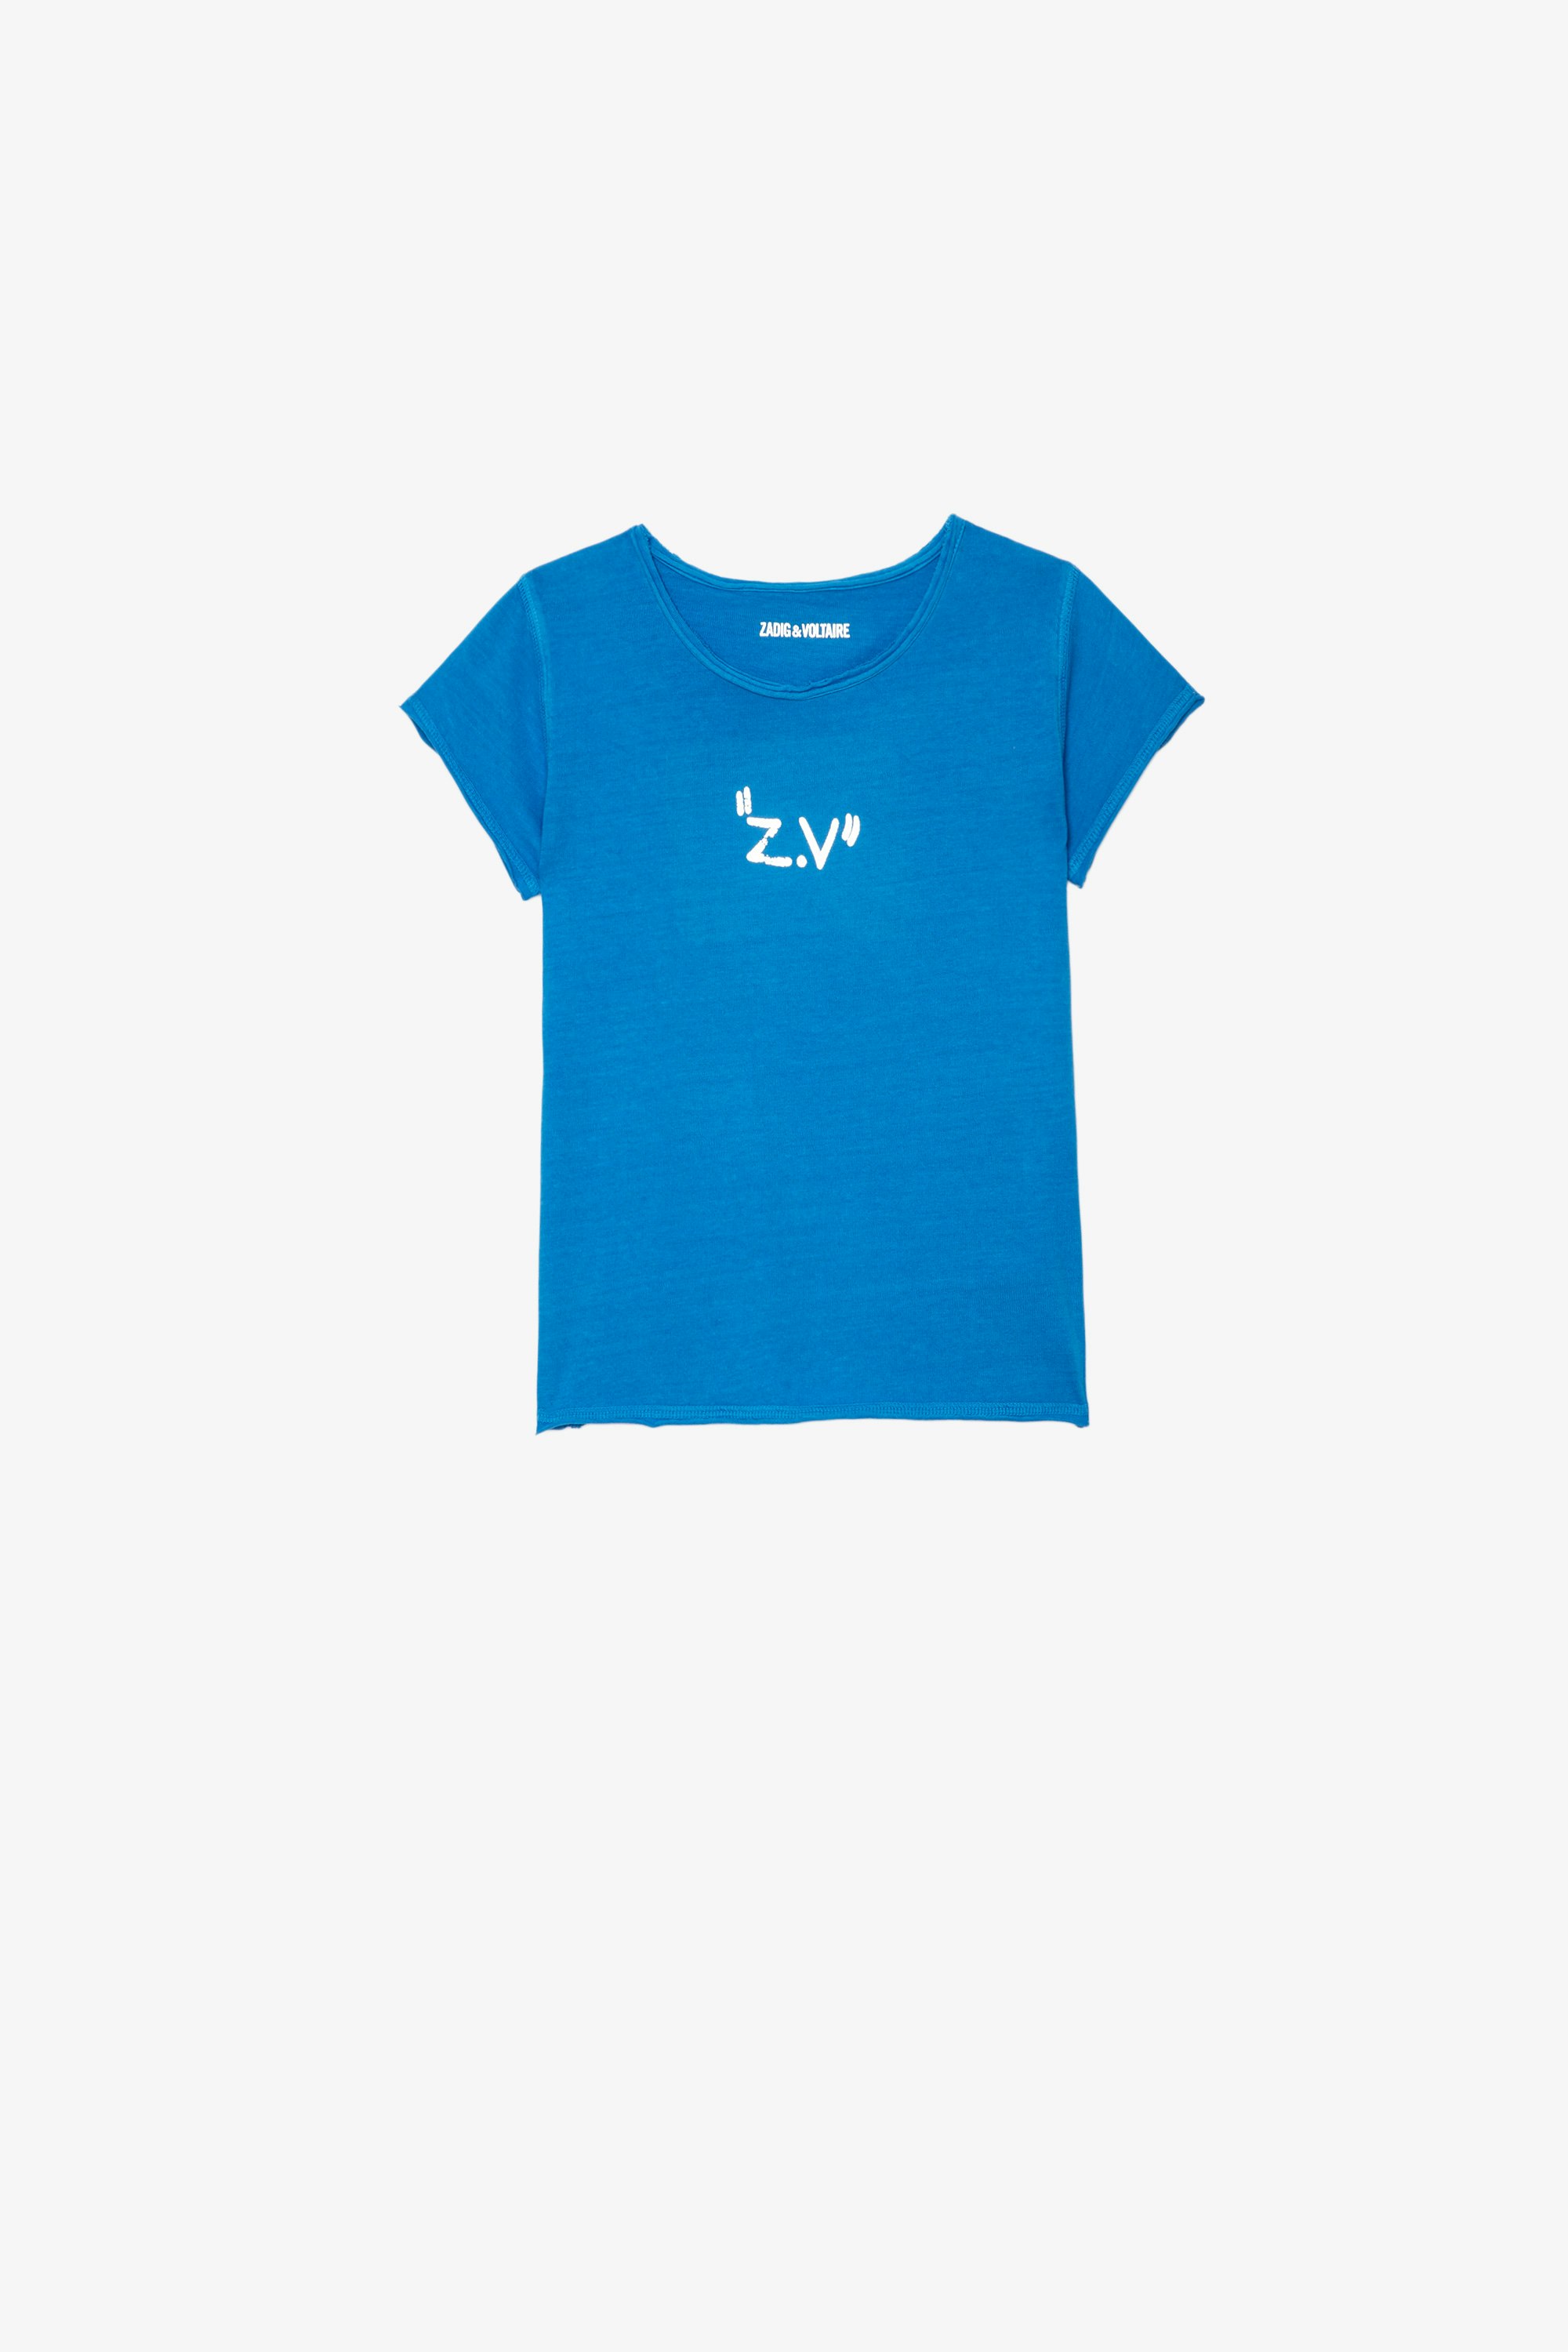 Kinder-T-Shirt Amber Kinder-T-Shirt aus blauem Baumwolljersey mit Prints in Metallic-Optik